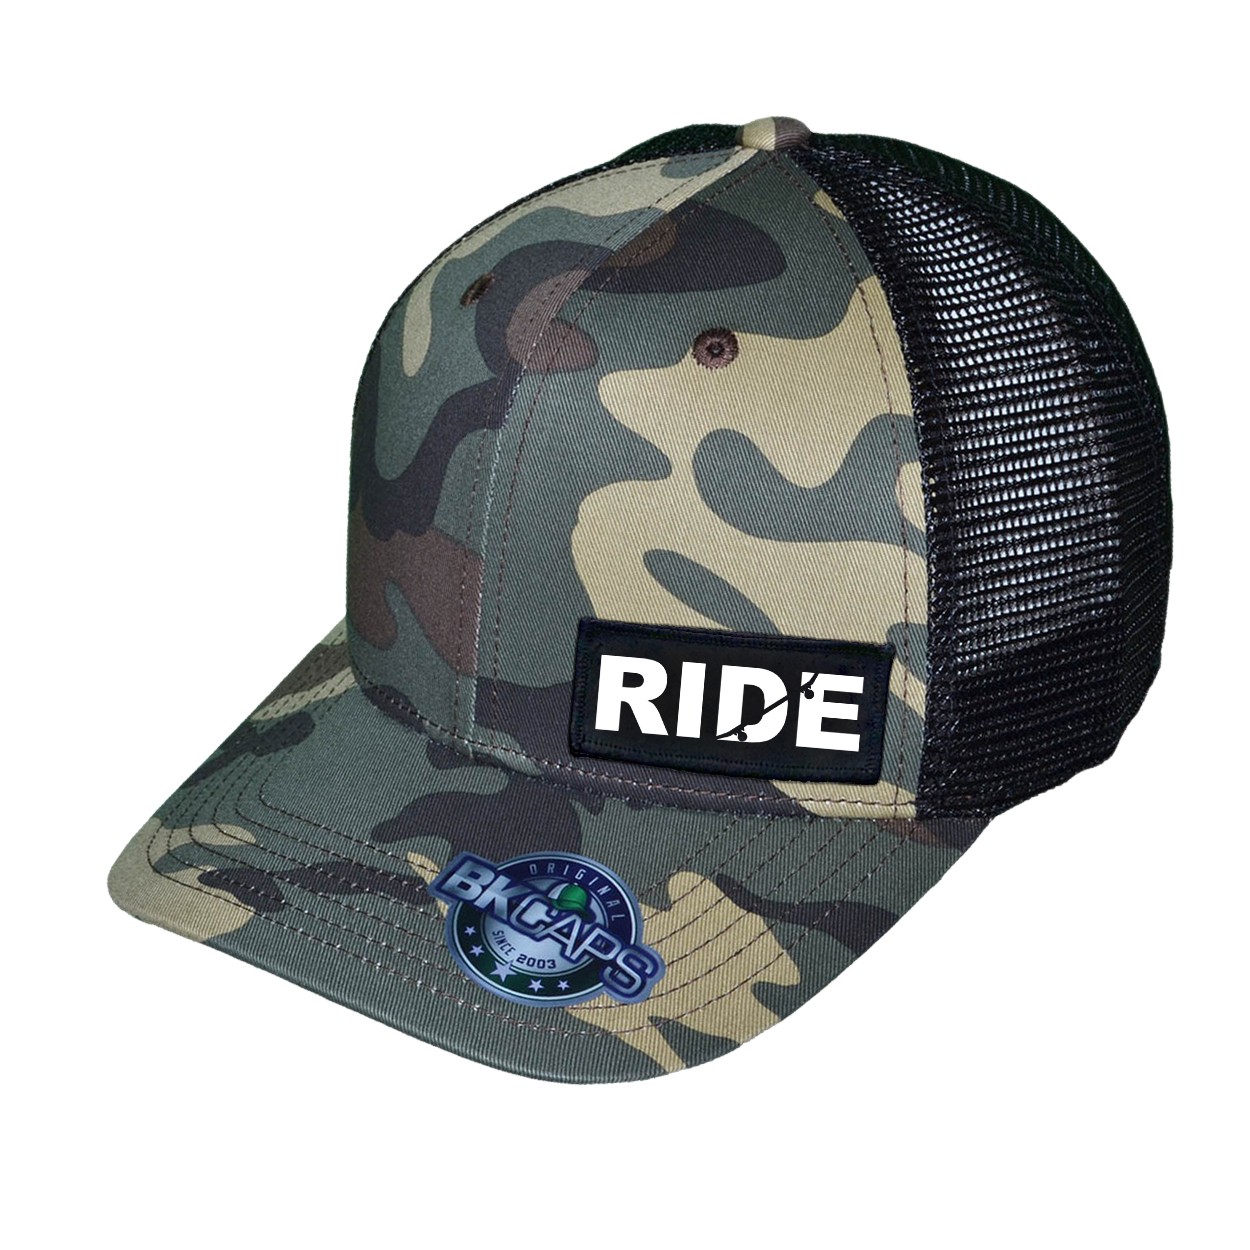 Ride Skateboard Logo Night Out Woven Patch Mesh Snapback Trucker Hat Khaki/Camo (White Logo)